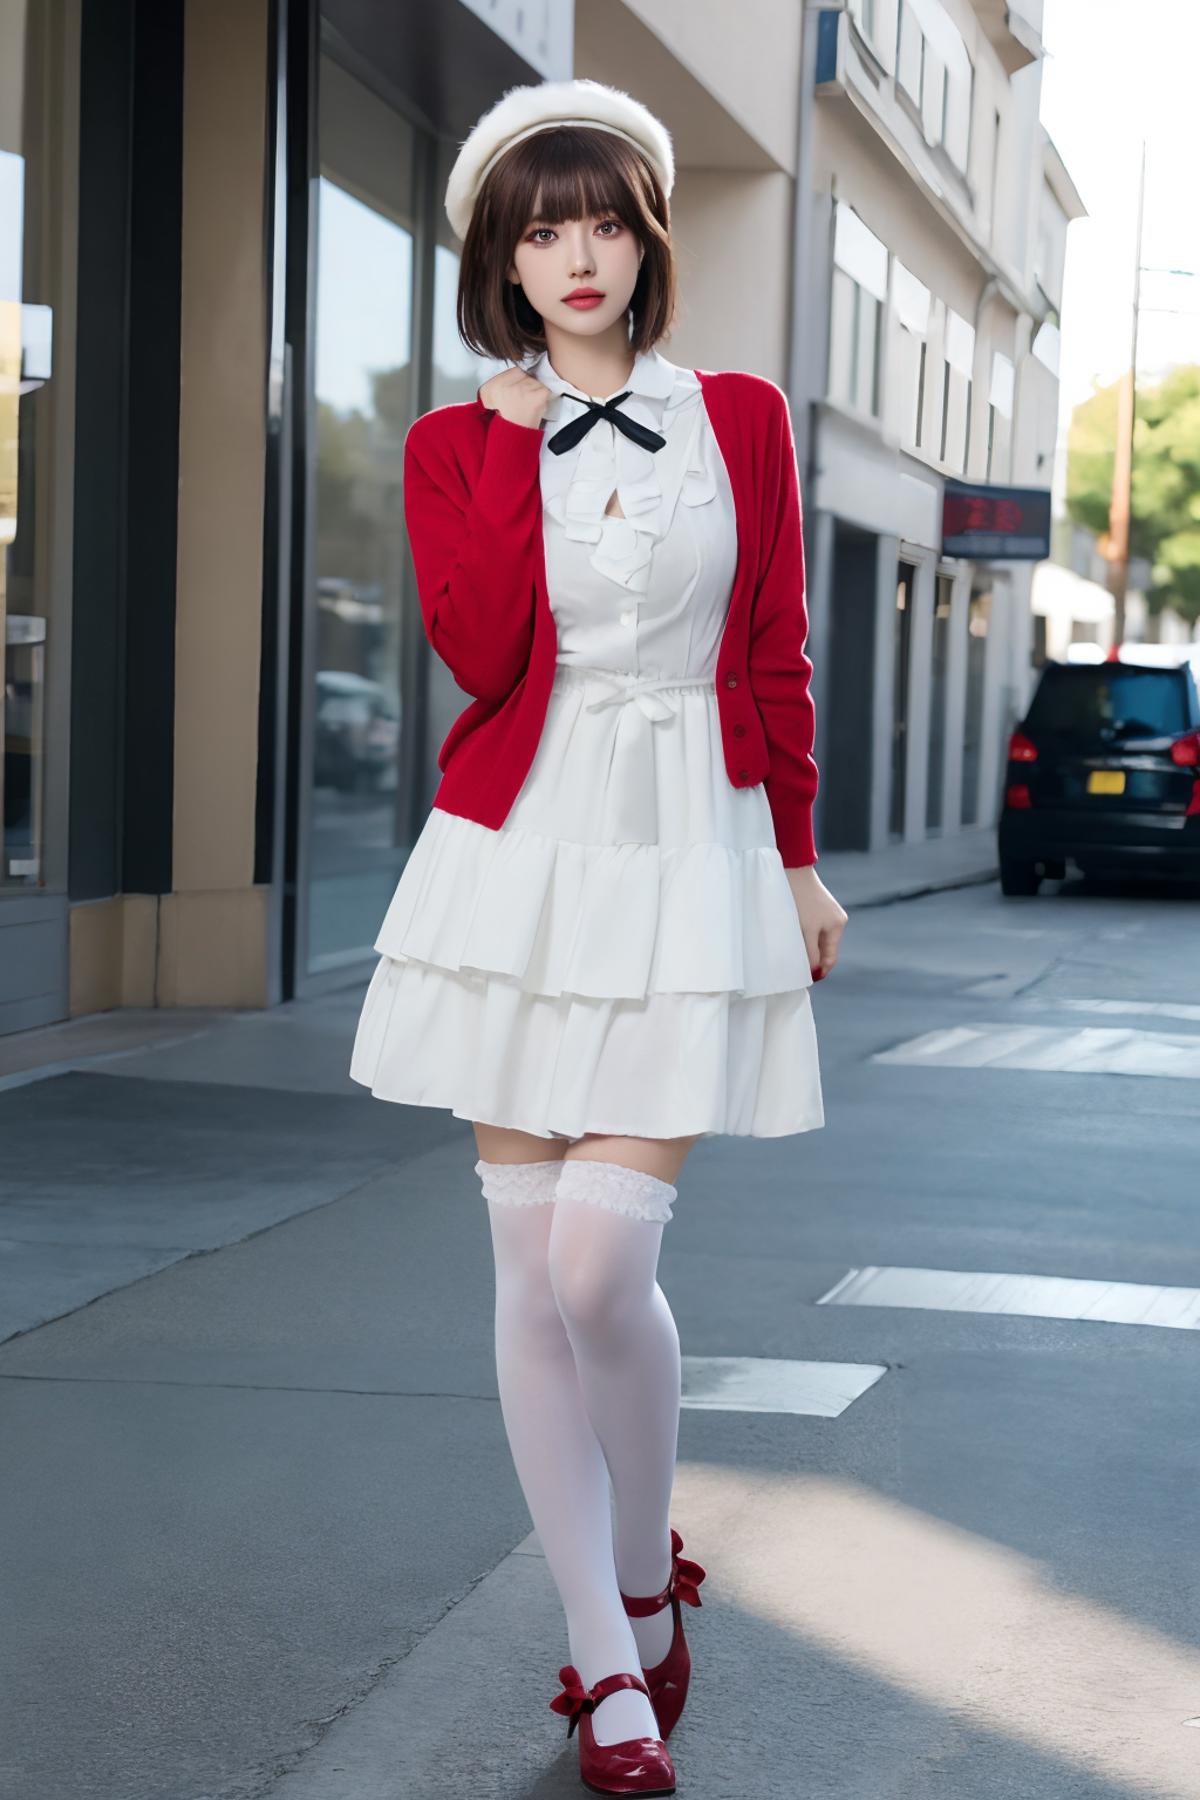 Katou Megumi 加藤恵 / SAEKANO   white dress, red jacket cosplay image by oppoace